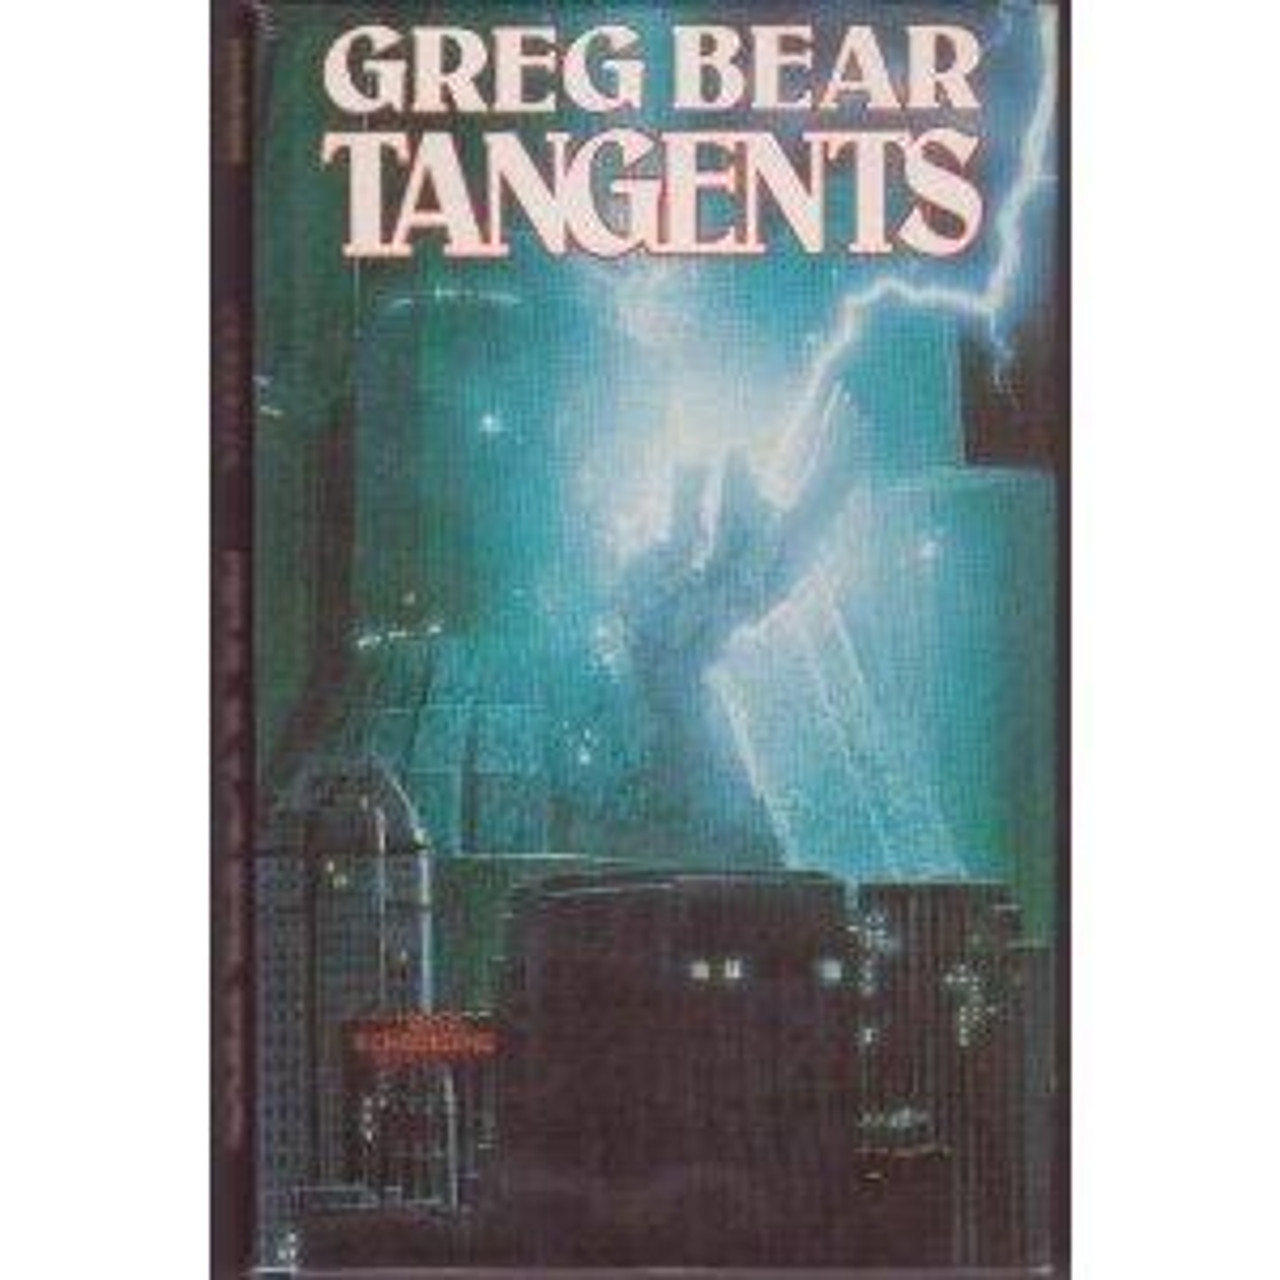 Bear, Greg - Tangents Science Fiction Short stories HB 1st Ed Gollancz SF 1989